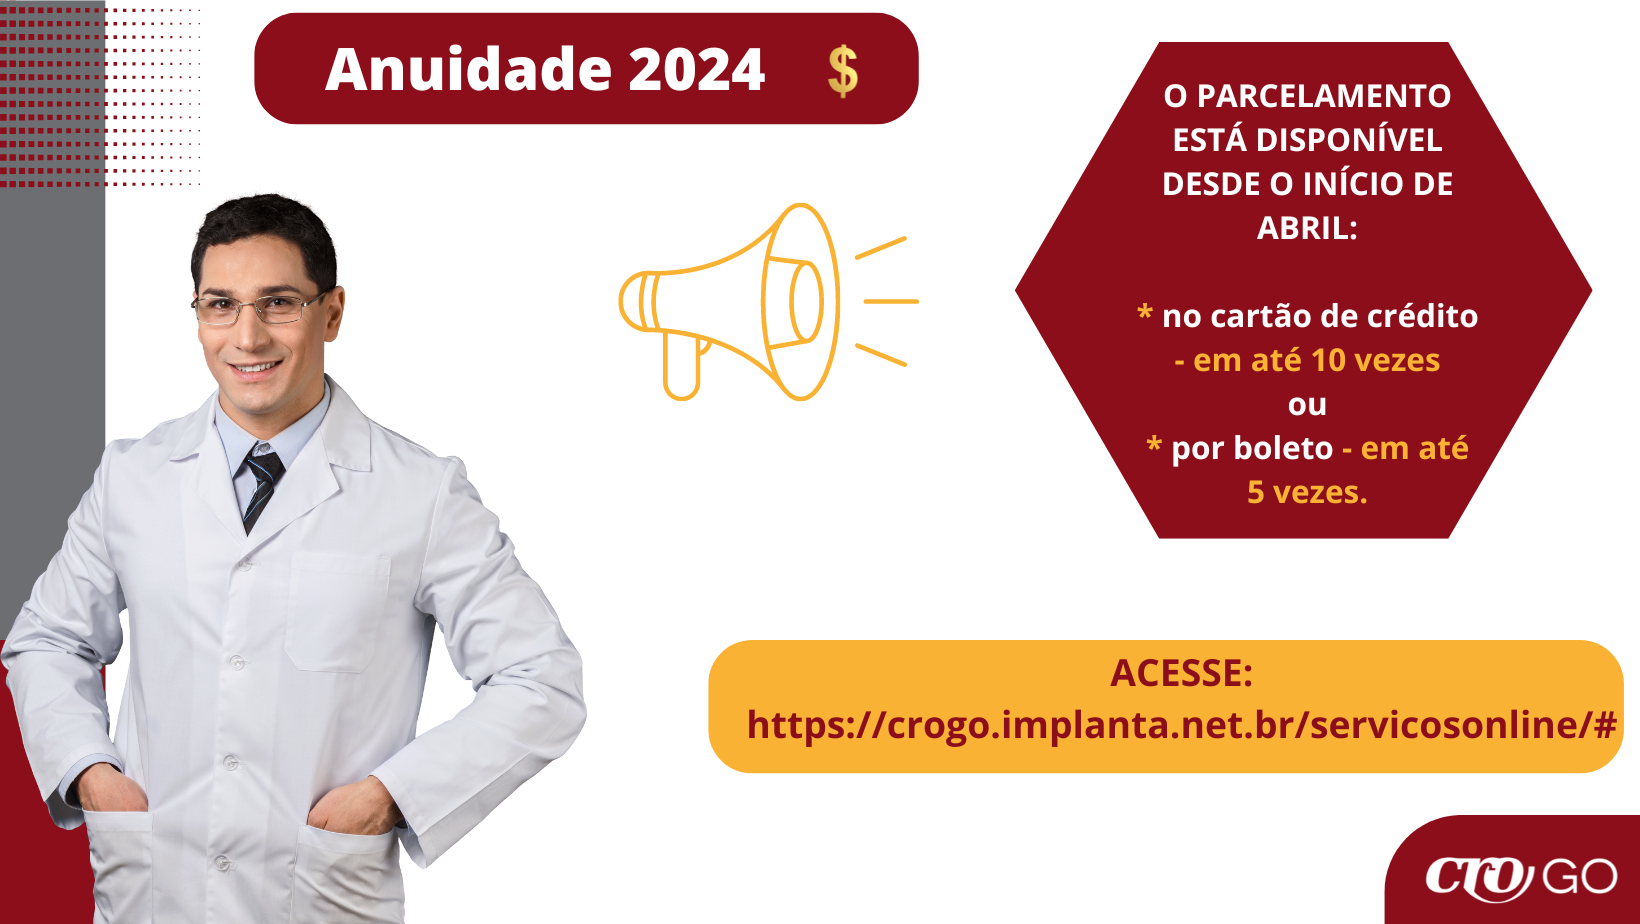 Anuidade_2024_-_Pague_parcelada_no_carto_ou_no_boleto_-_Capa_para_Facebook